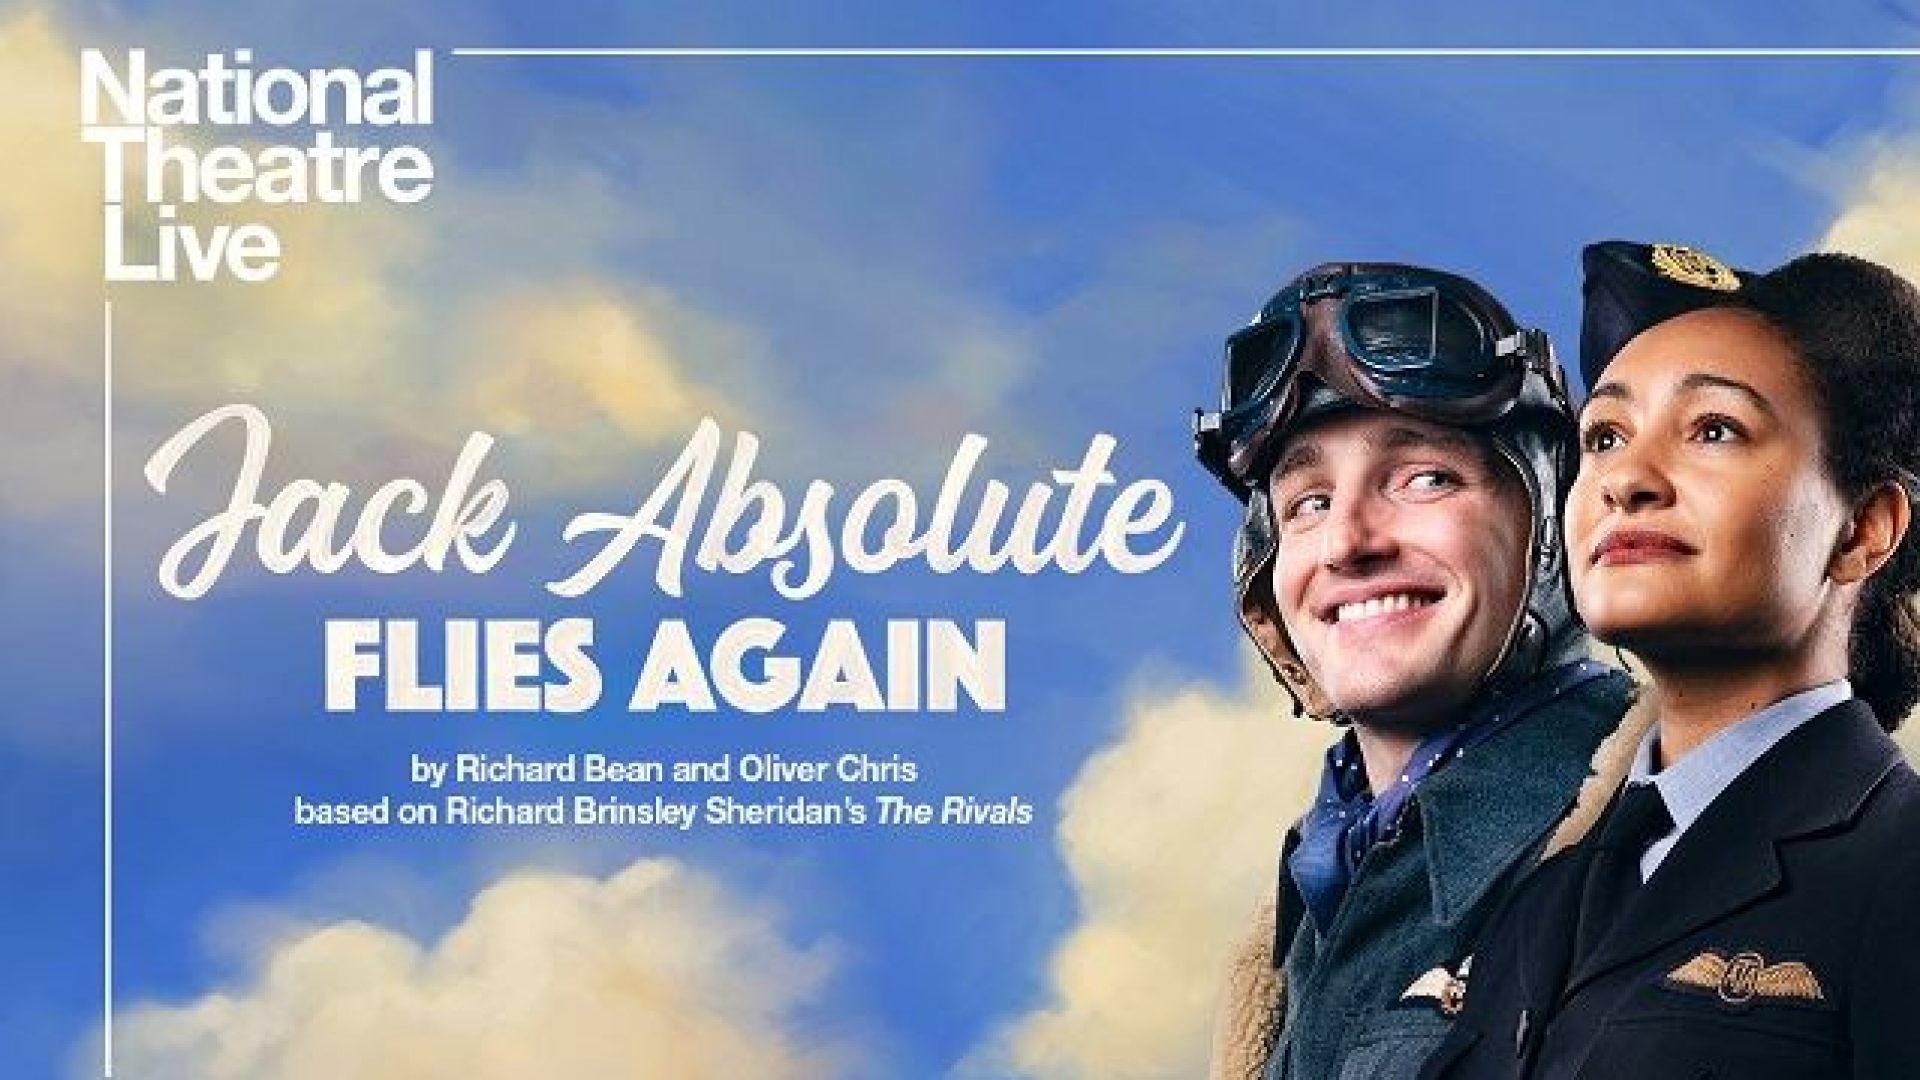 National Theatre Live Screening: Jack Absolute Flies Again